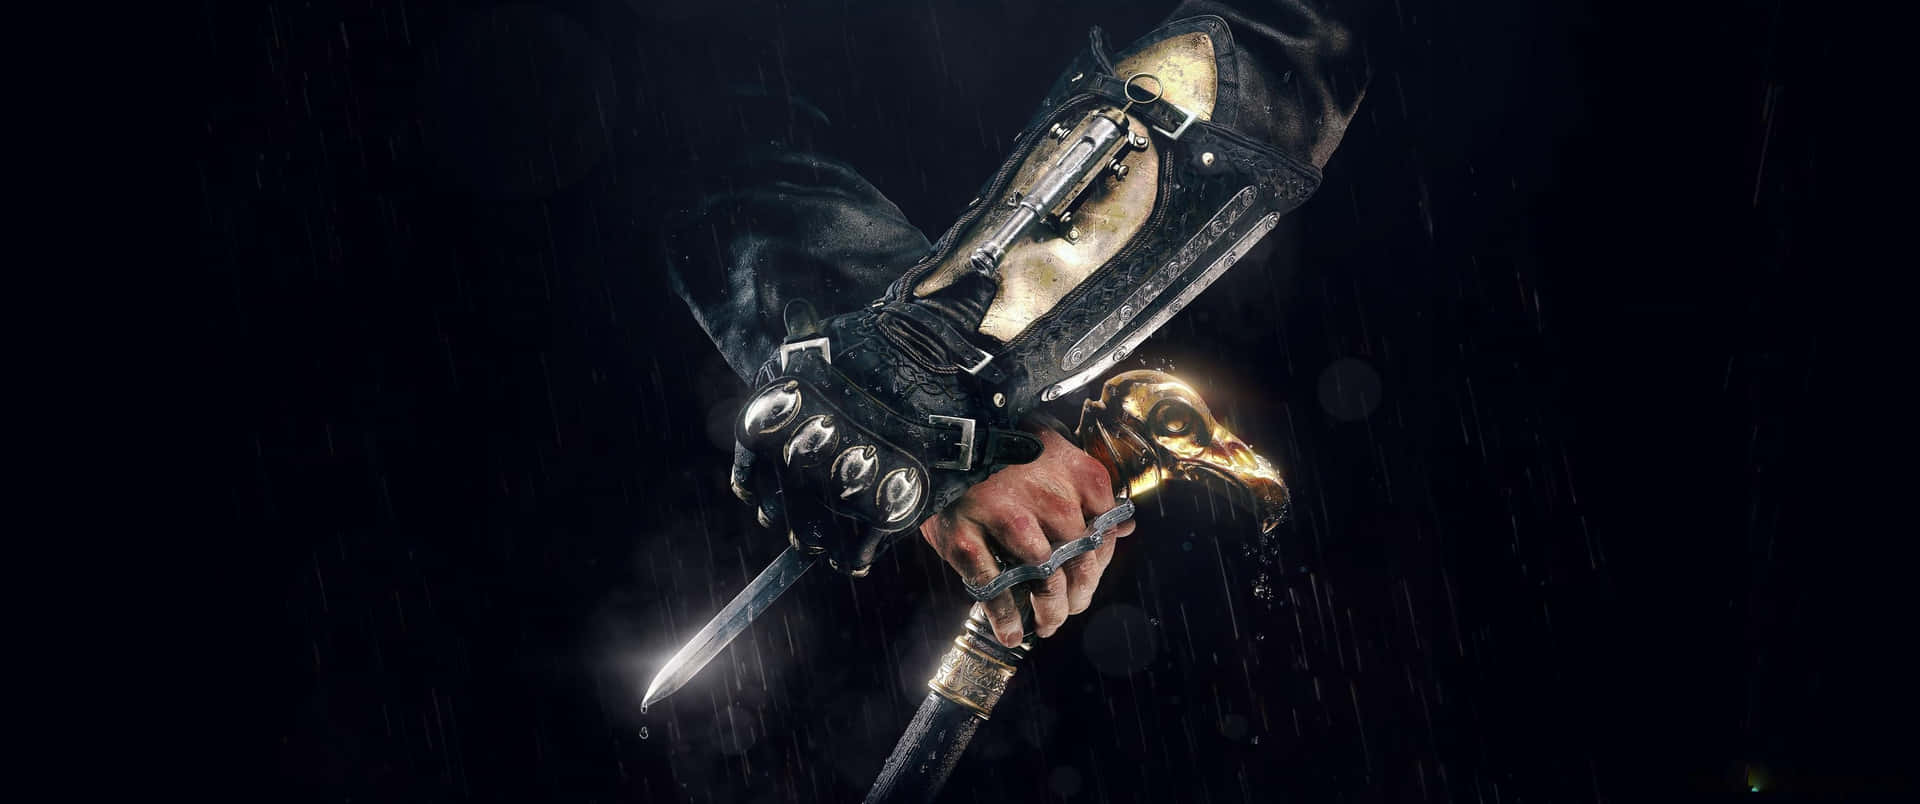 3440x1440p Assassin's Creed Odyssey Baggrund Skjulte Blade Og En Stok